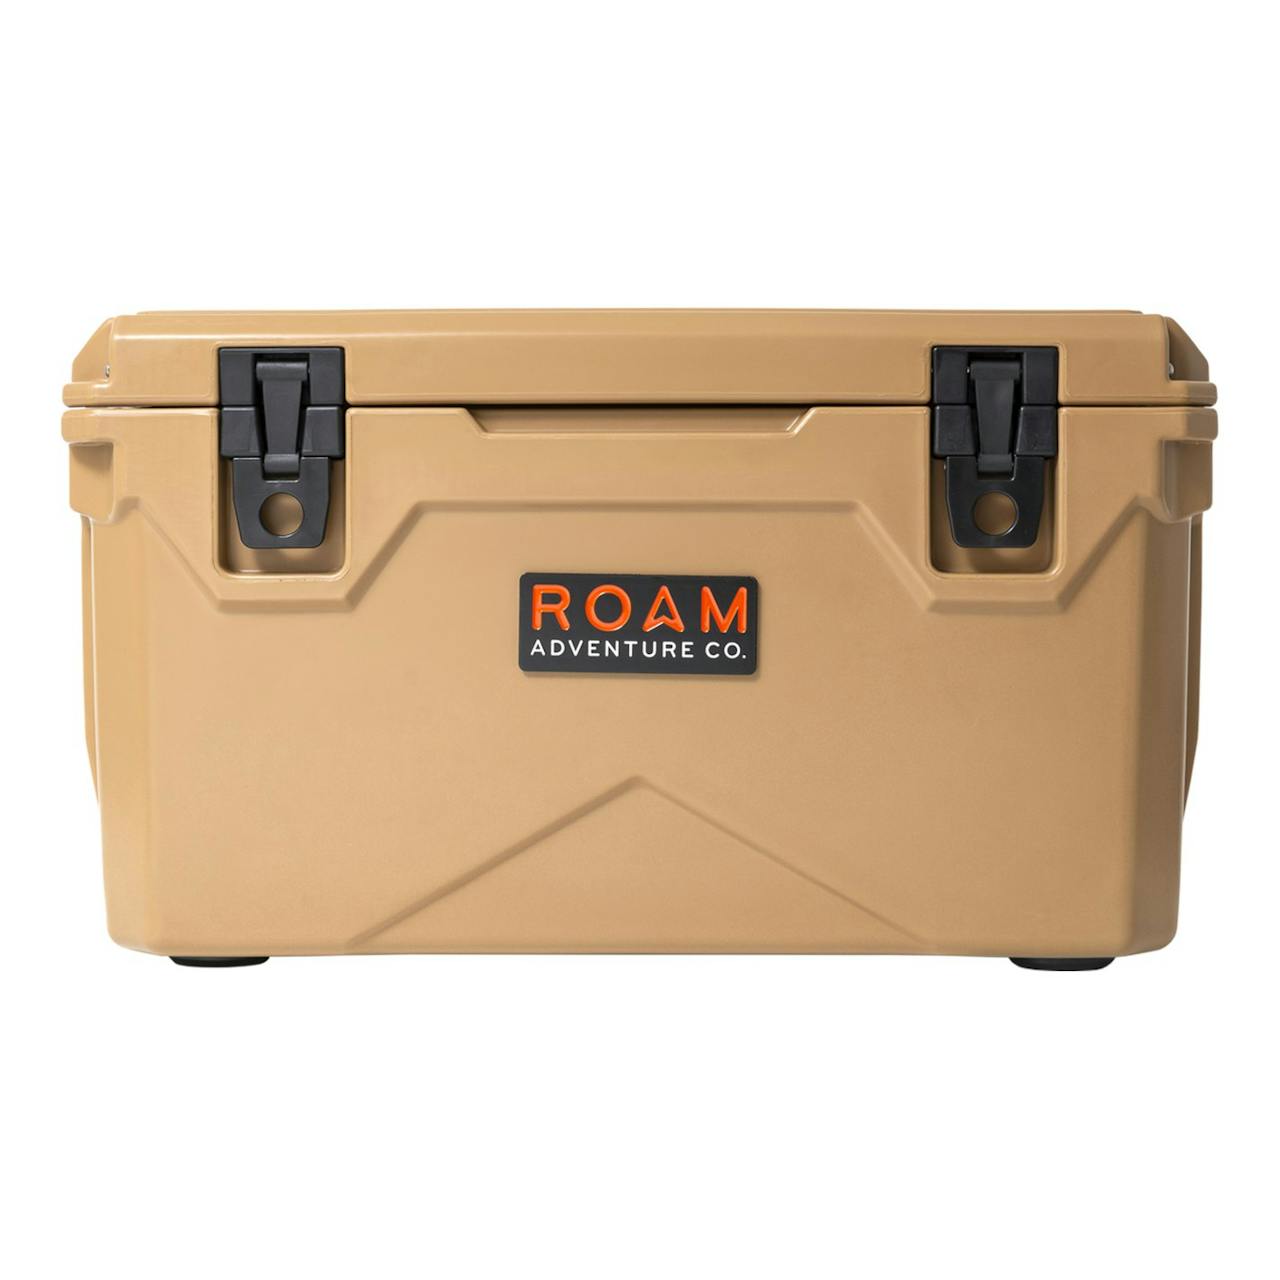 ROAM Adventure Co. Rugged Cooler 45QT